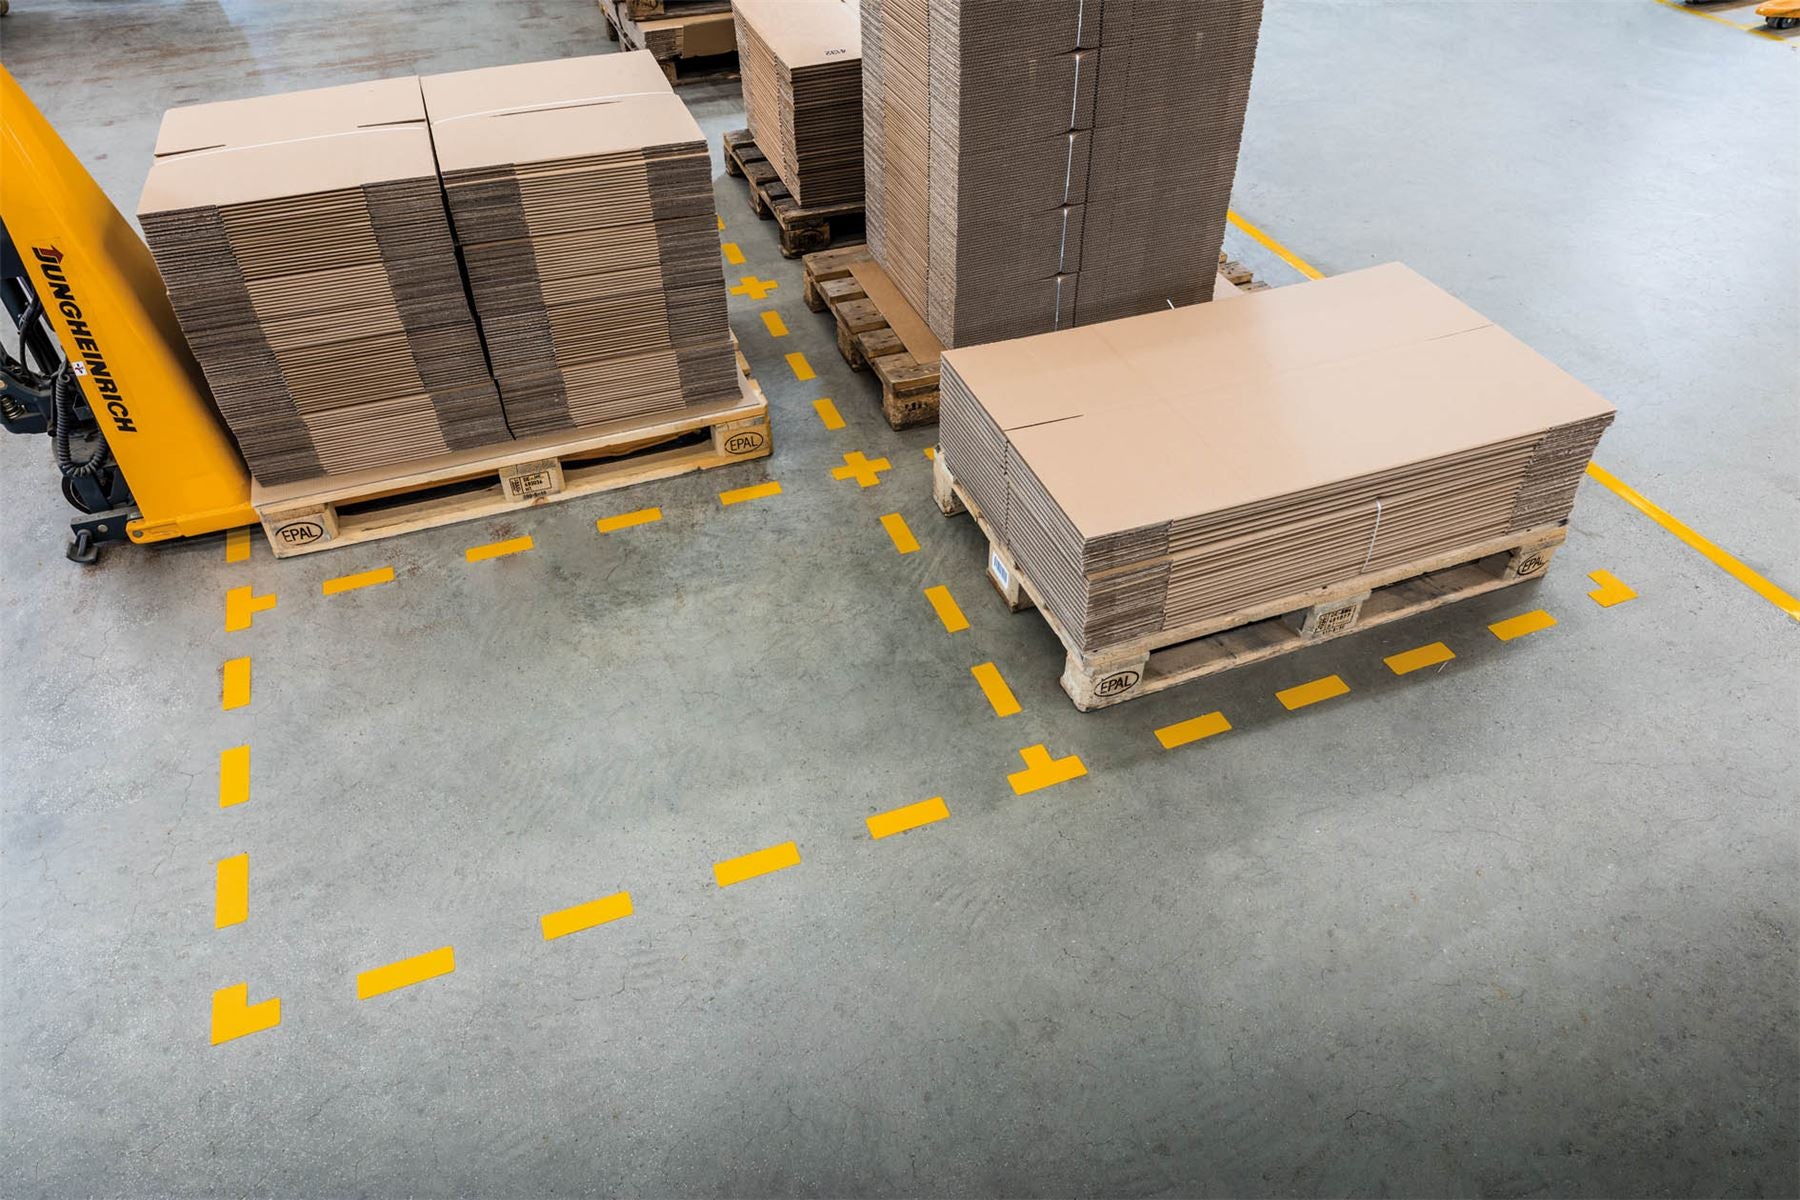 Durable Heavy Duty Adhesive Floor Marking Dash Shape | 10 Pack | Yellow